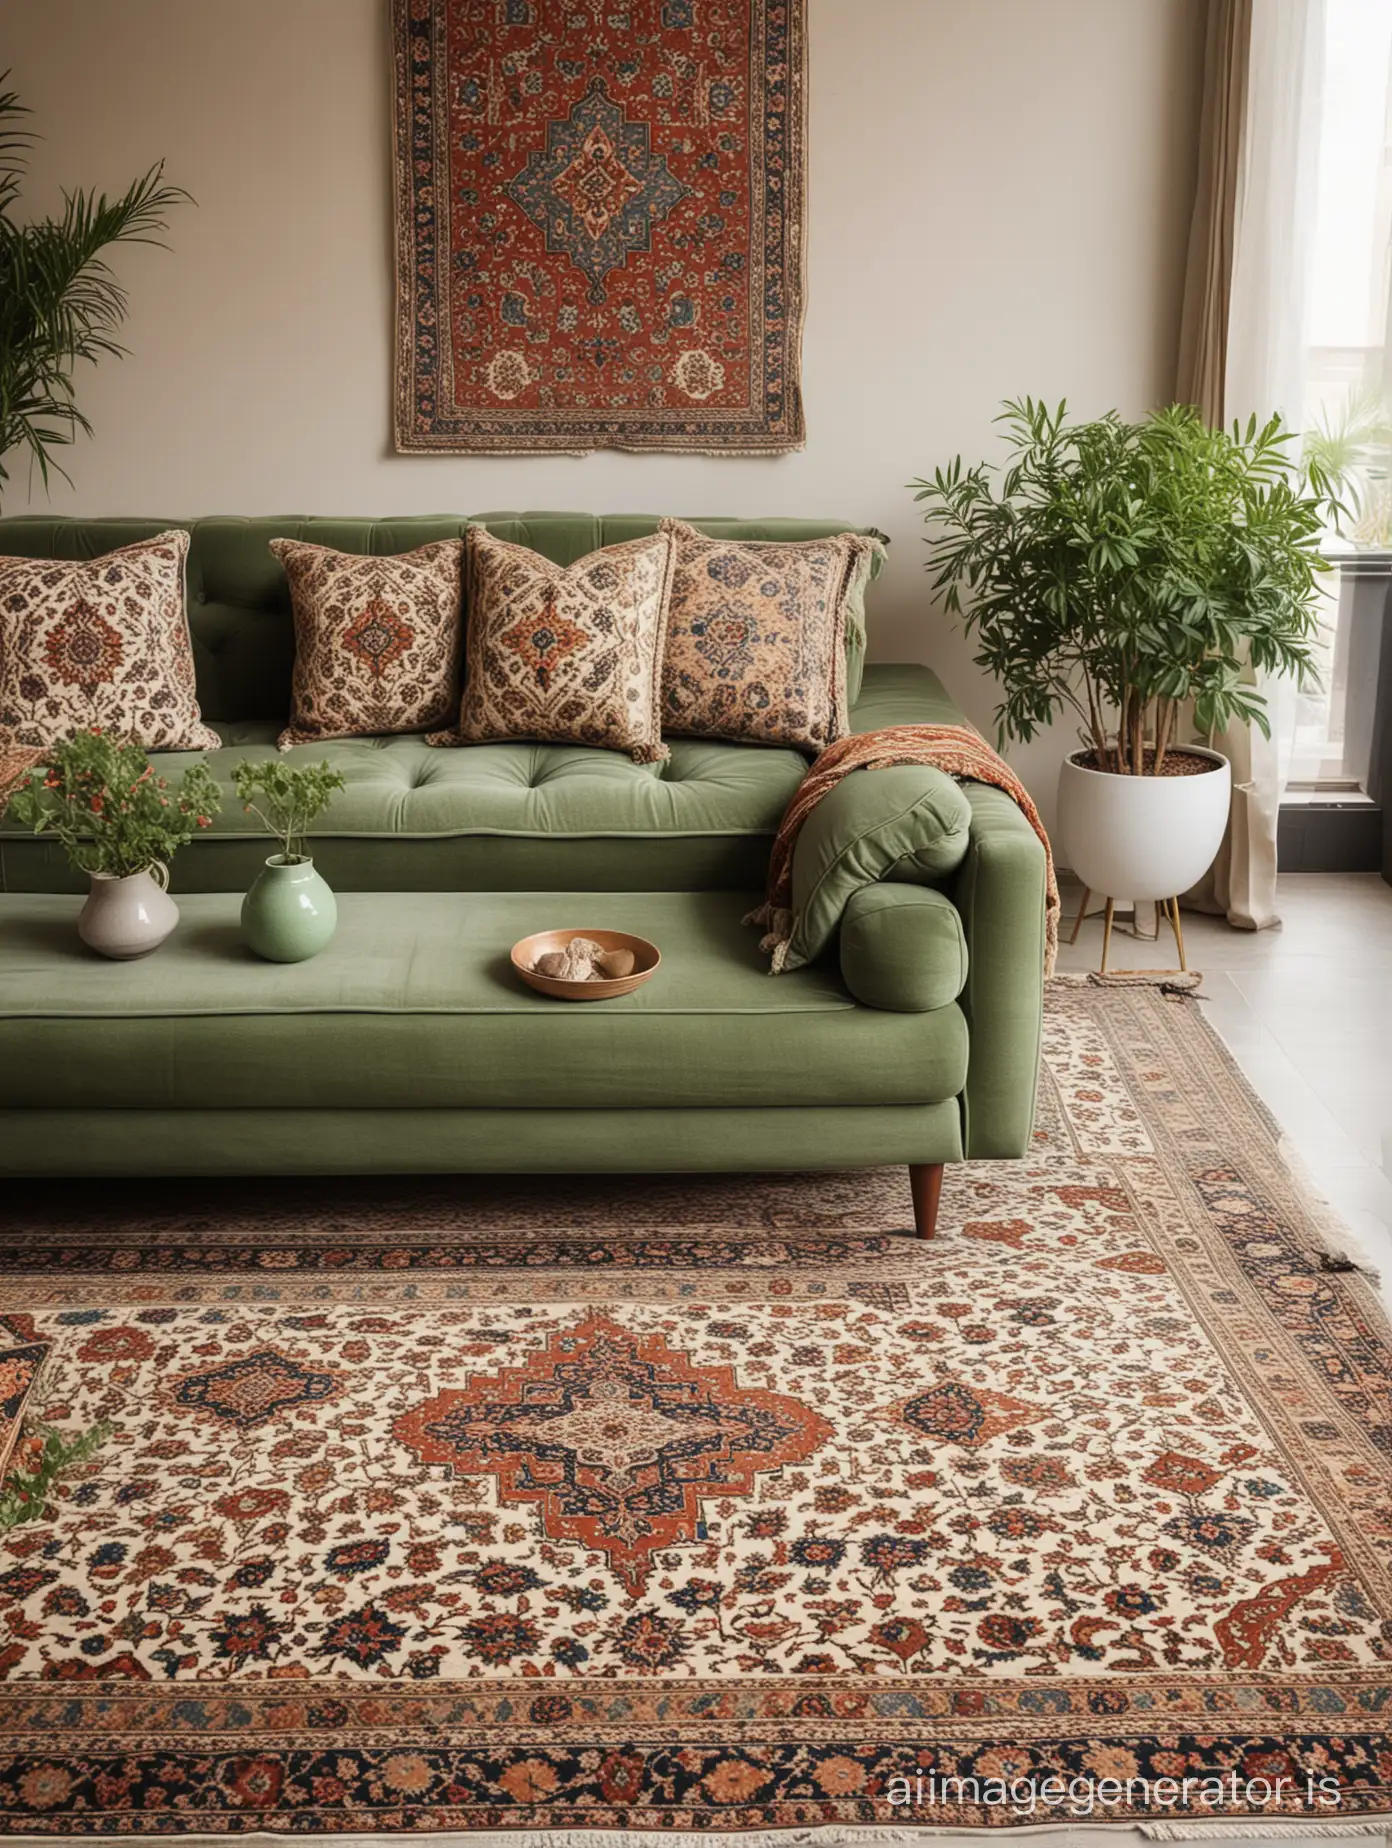 Minimalist-Sofa-with-Persian-Carpet-Texture-and-Green-Pot-Decor